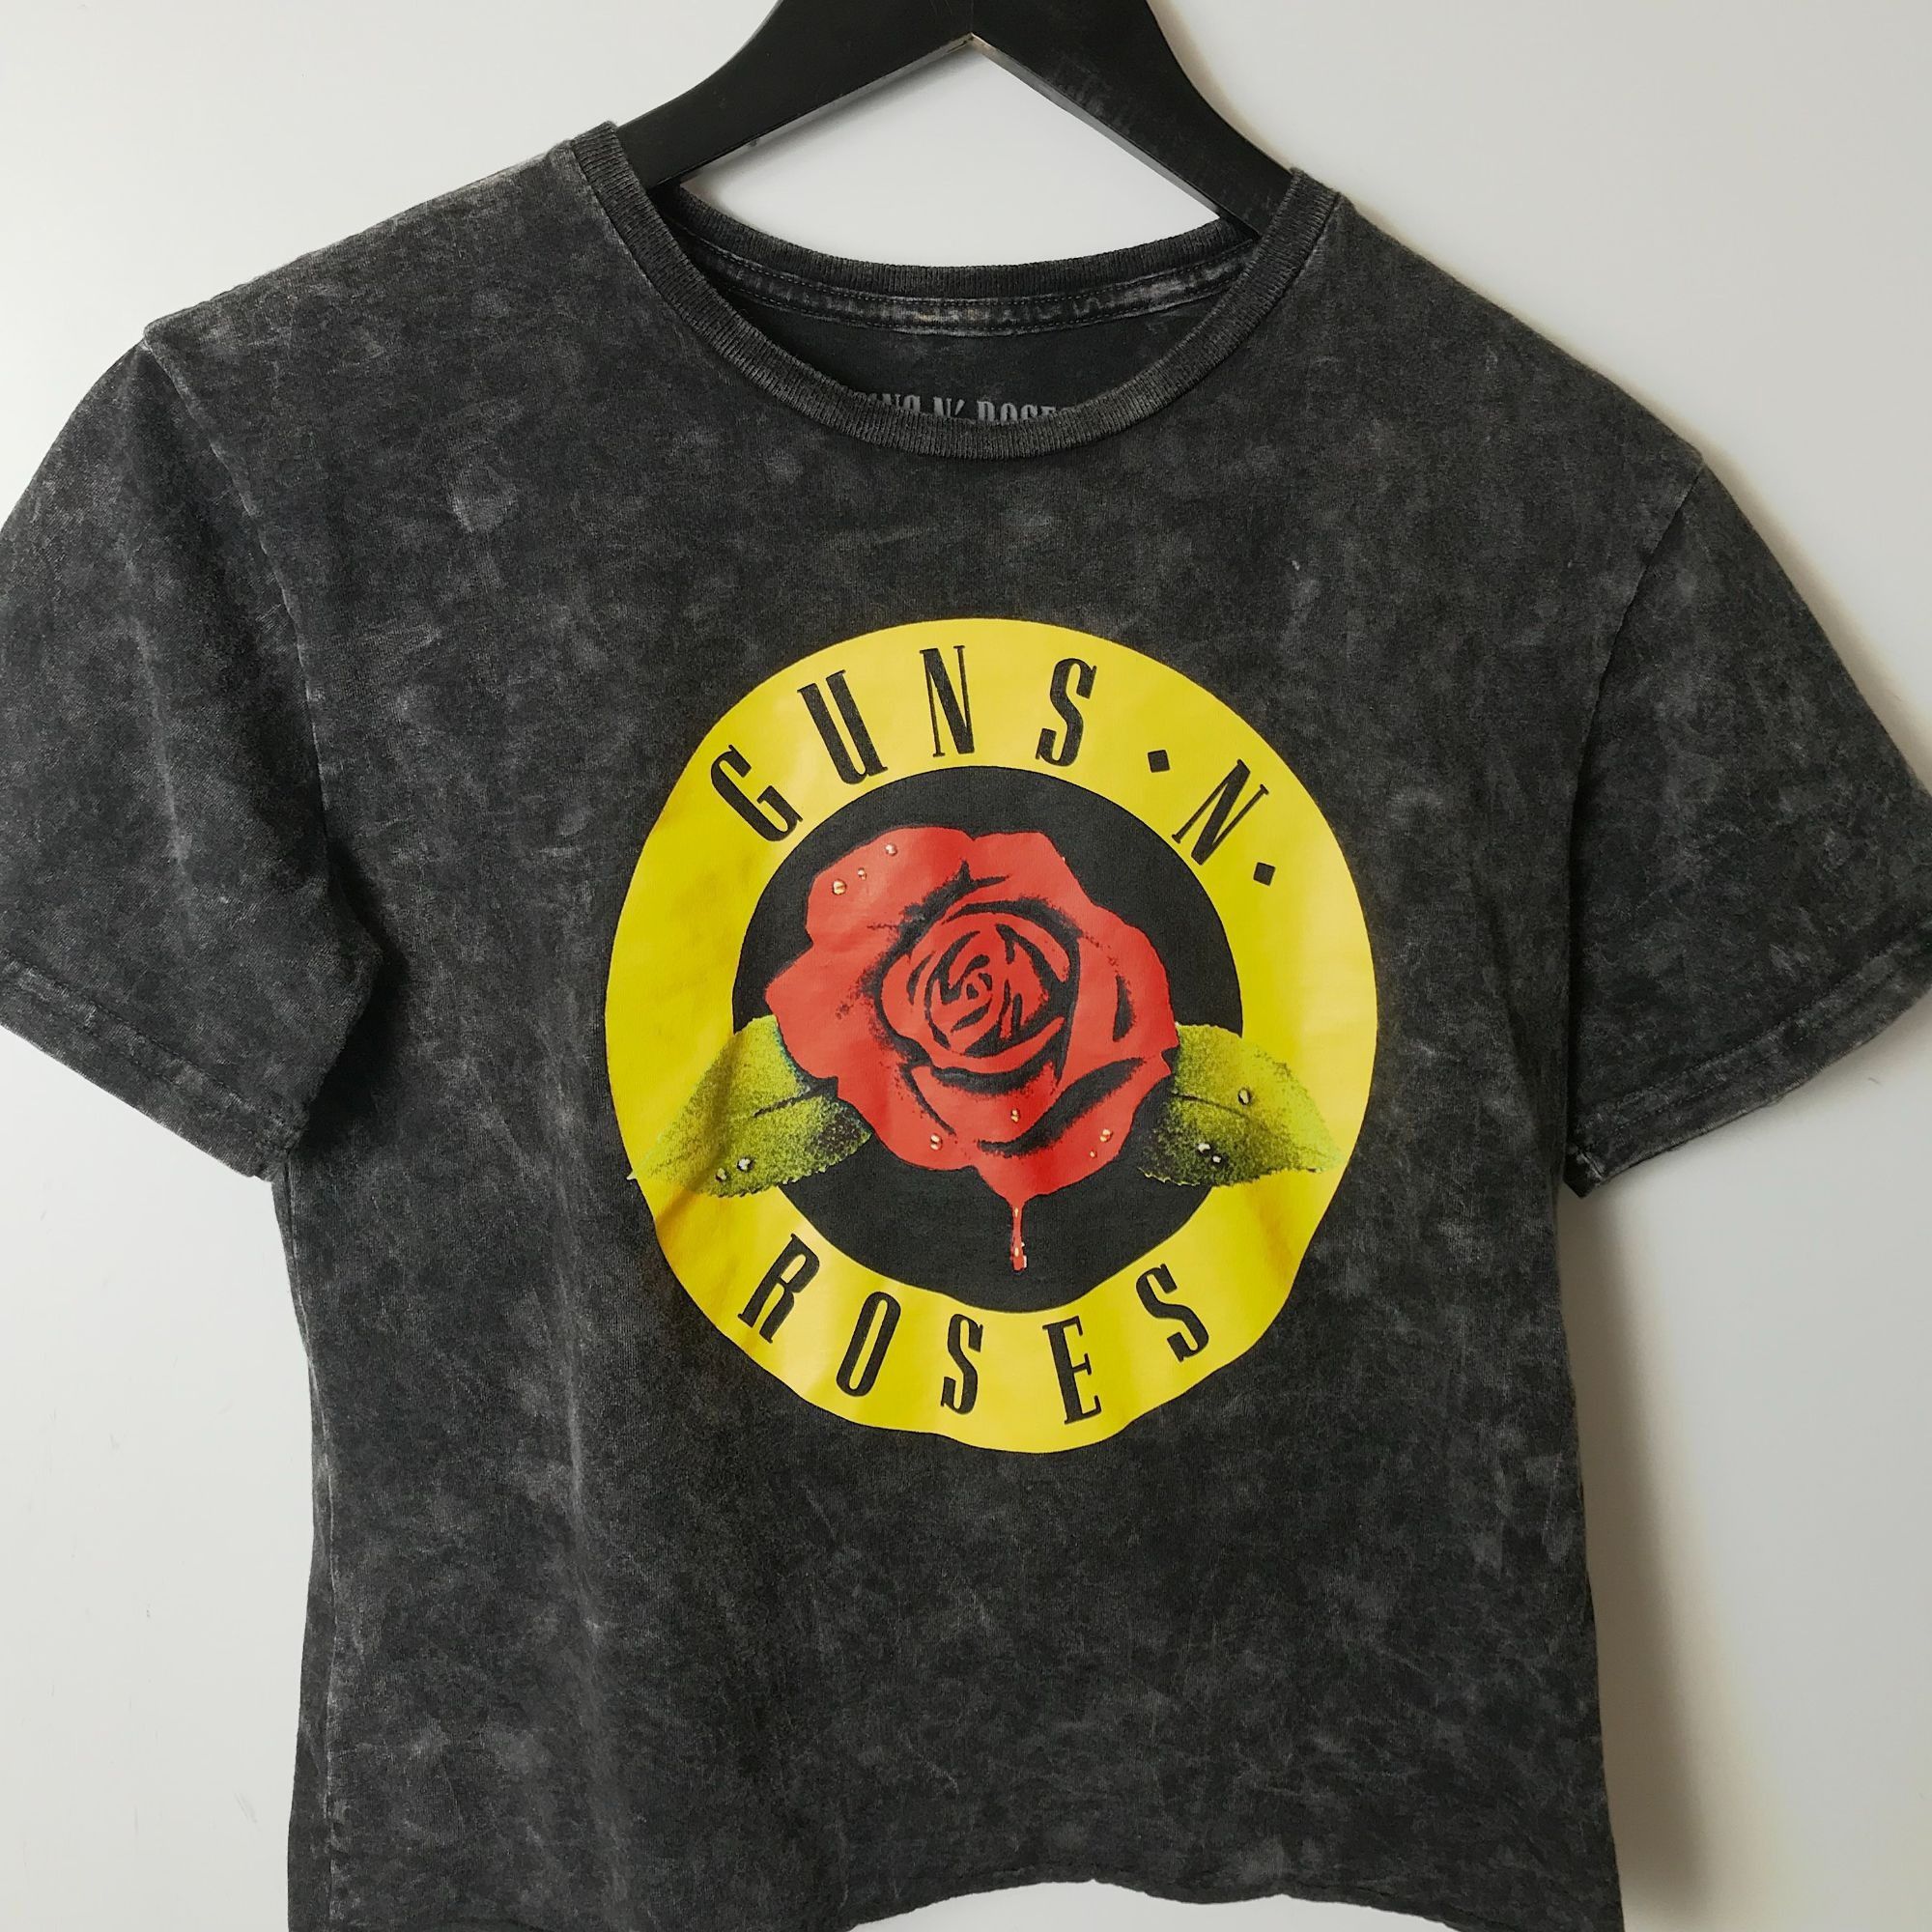 Urban Outfitters Guns N' Roses T Shirt Womens Black Medium Flower Raw Hem M Size M / US 6-8 / IT 42-44 - 9 Thumbnail